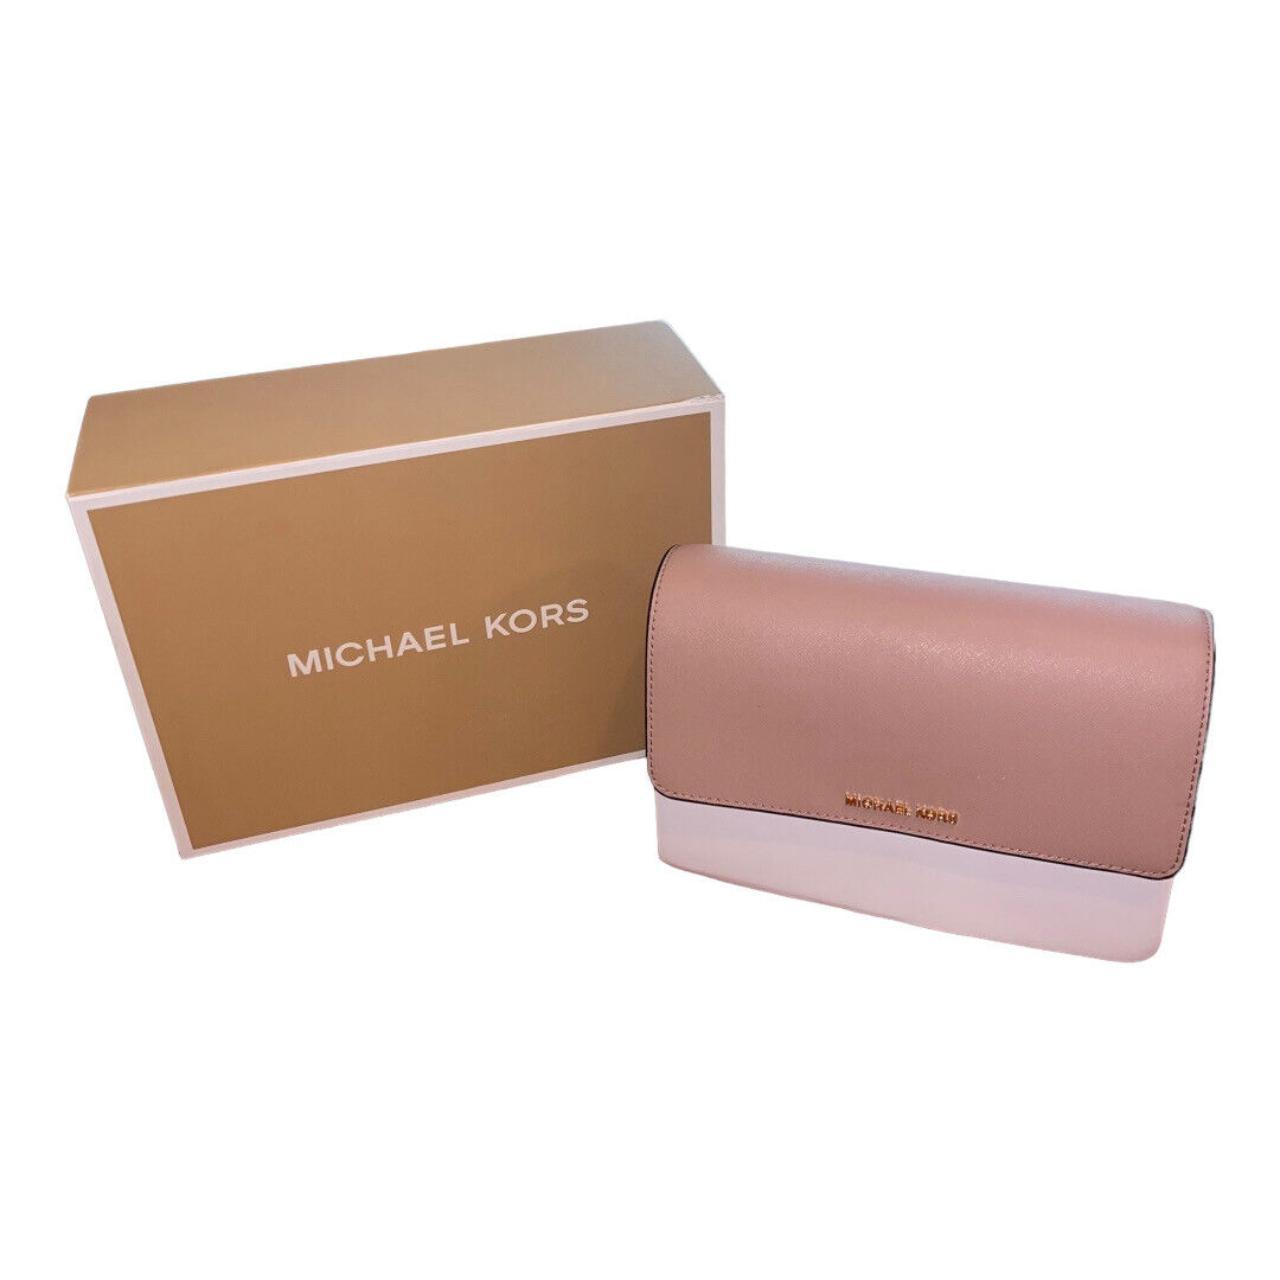 Michael Kors White Elsie Leather Box Clutch Bag